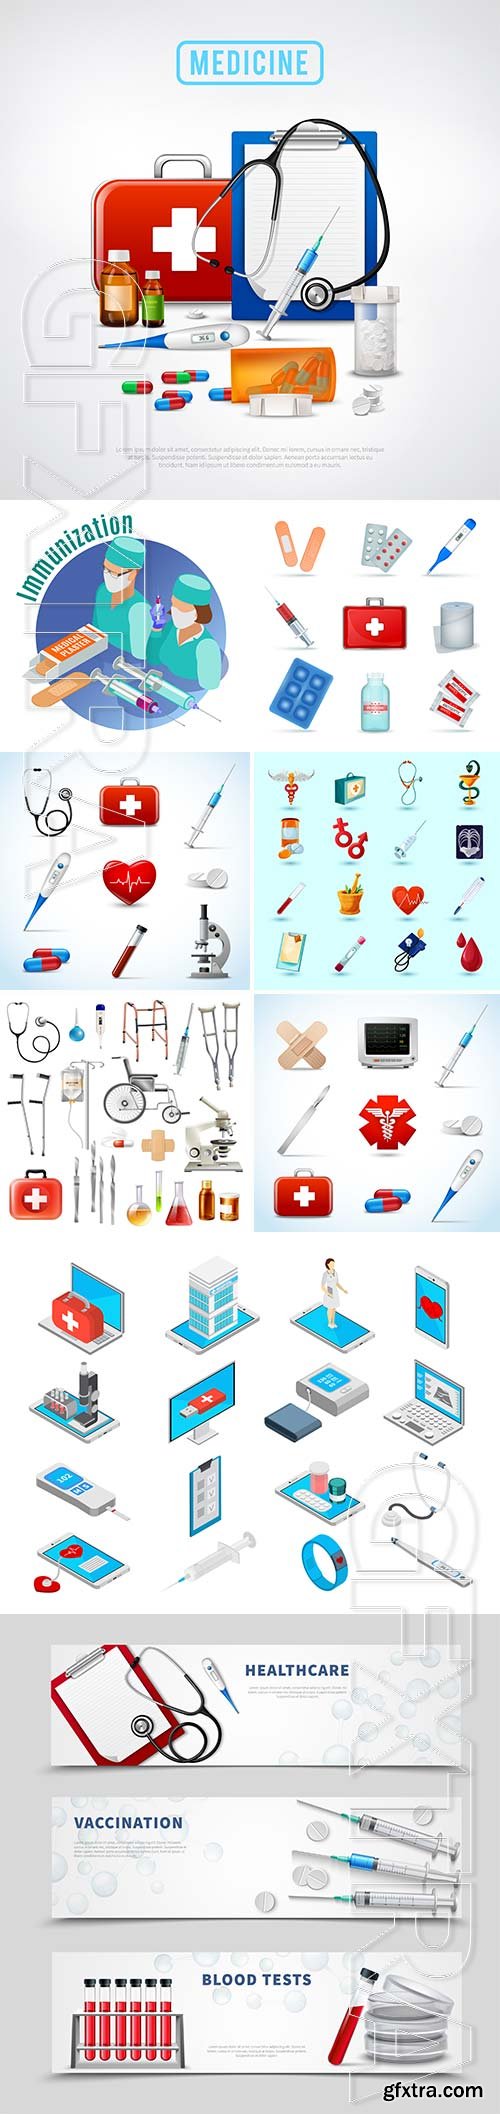 Medicine isometric concept with medical equipment symbols vector illustration